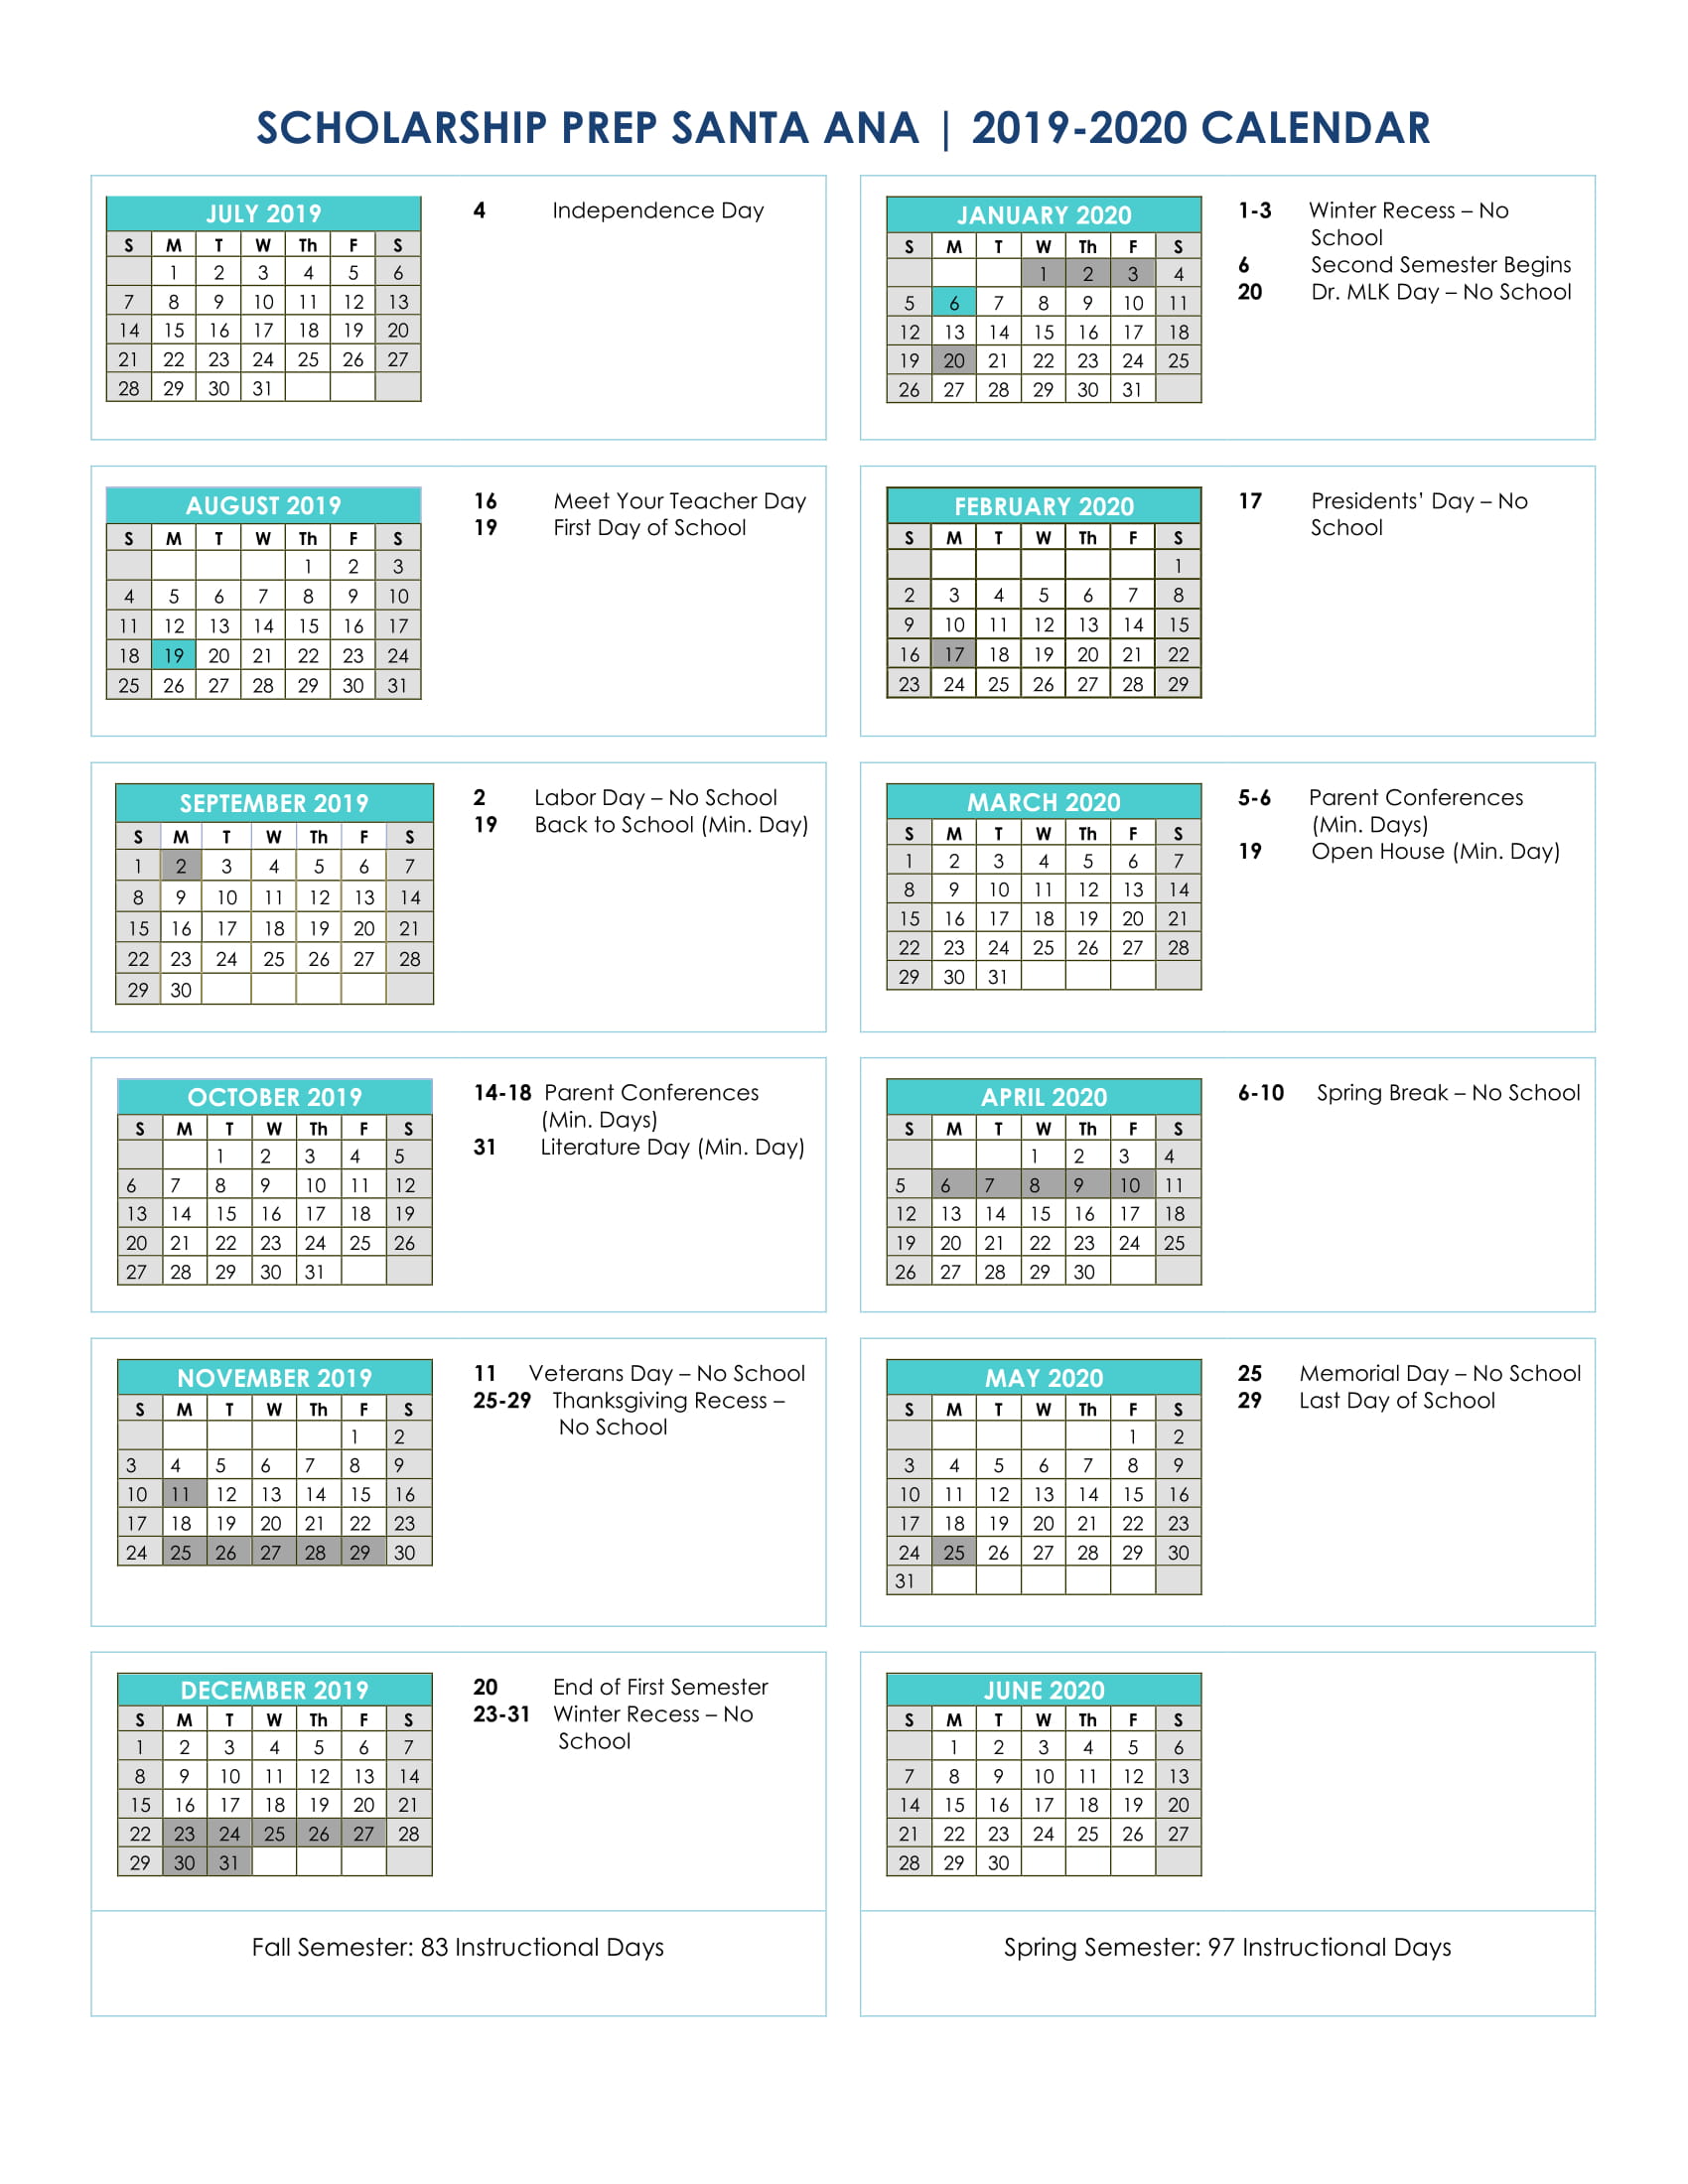 2019-2020 Santa Ana's Master Calendar Available Now! - Santa Ana